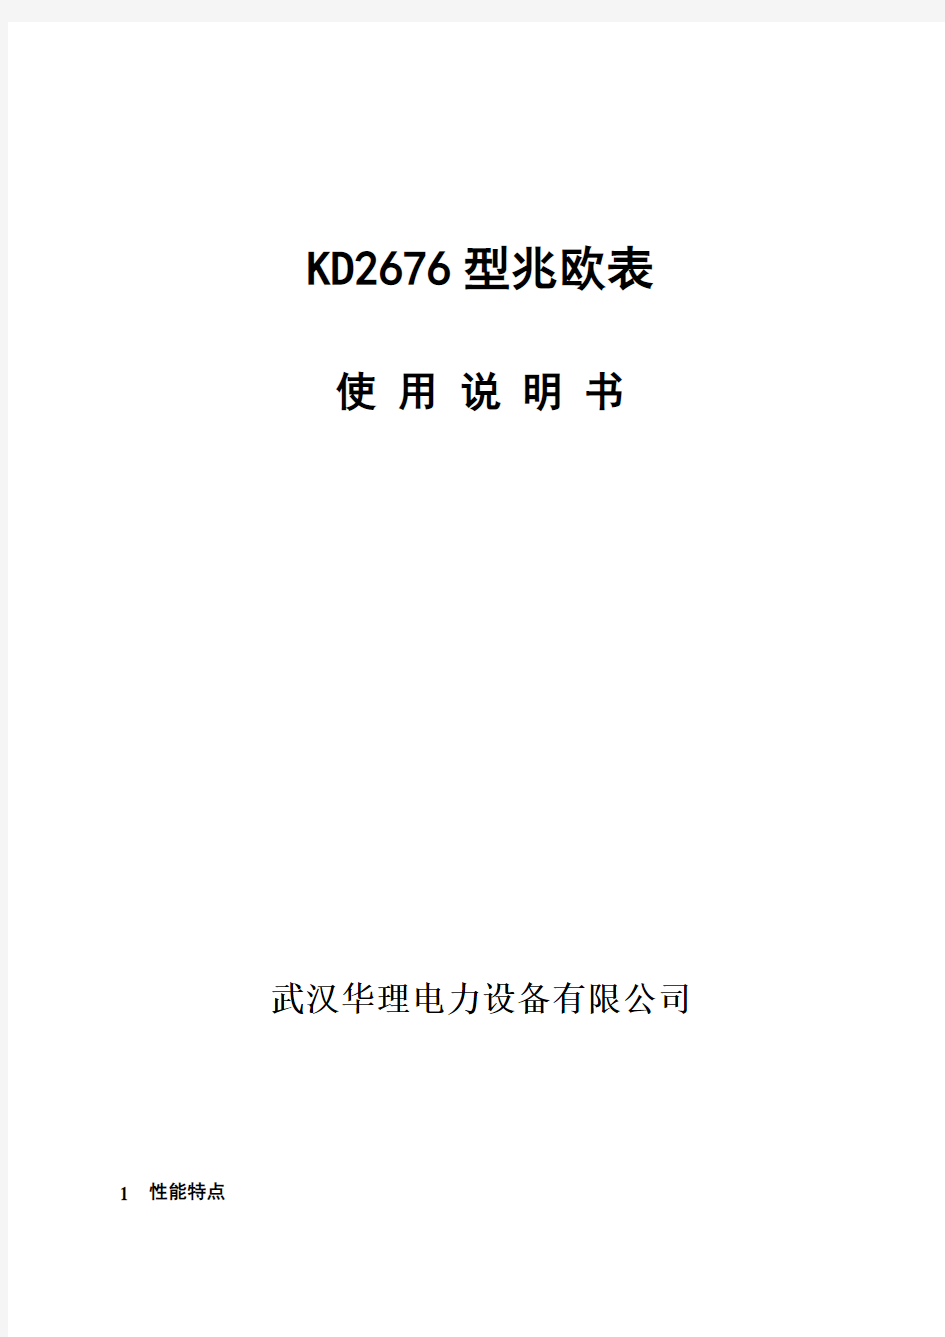 KD2676型兆欧表使用说明书